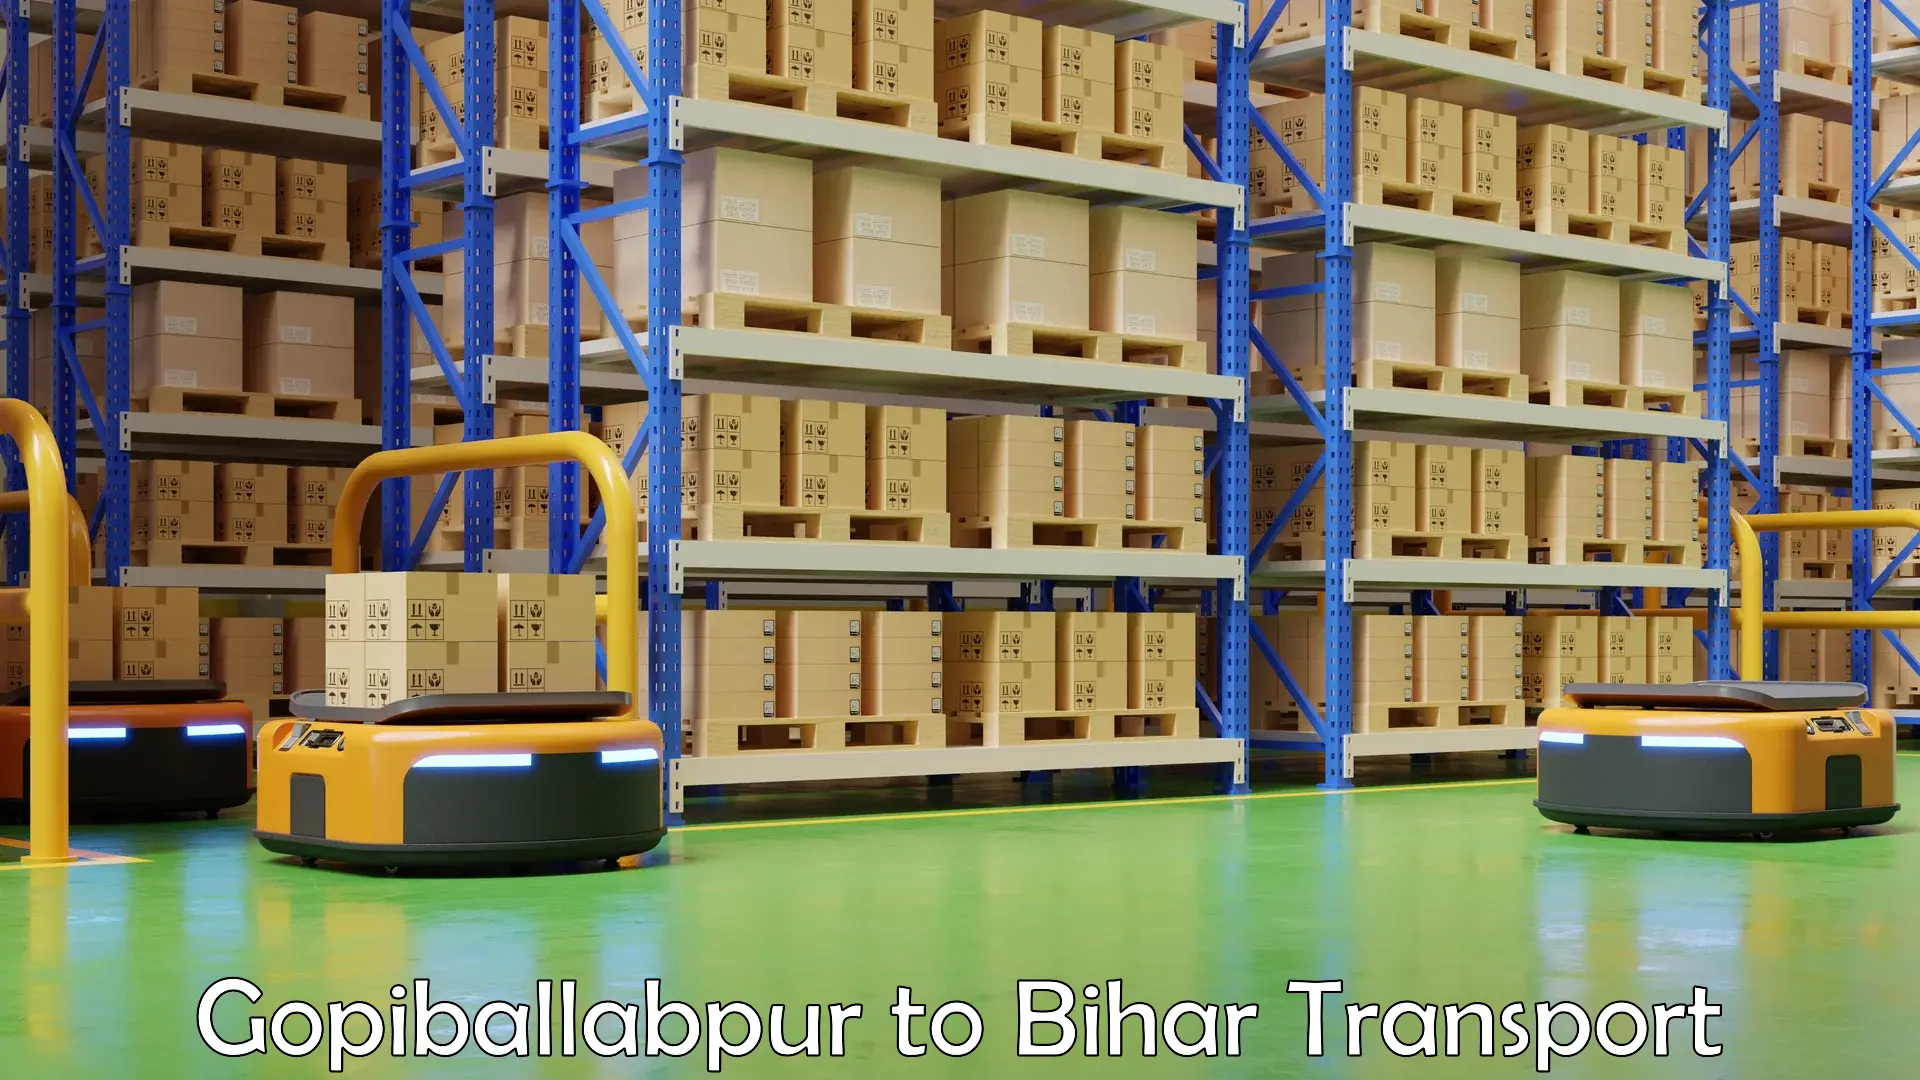 Truck transport companies in India Gopiballabpur to Bihar